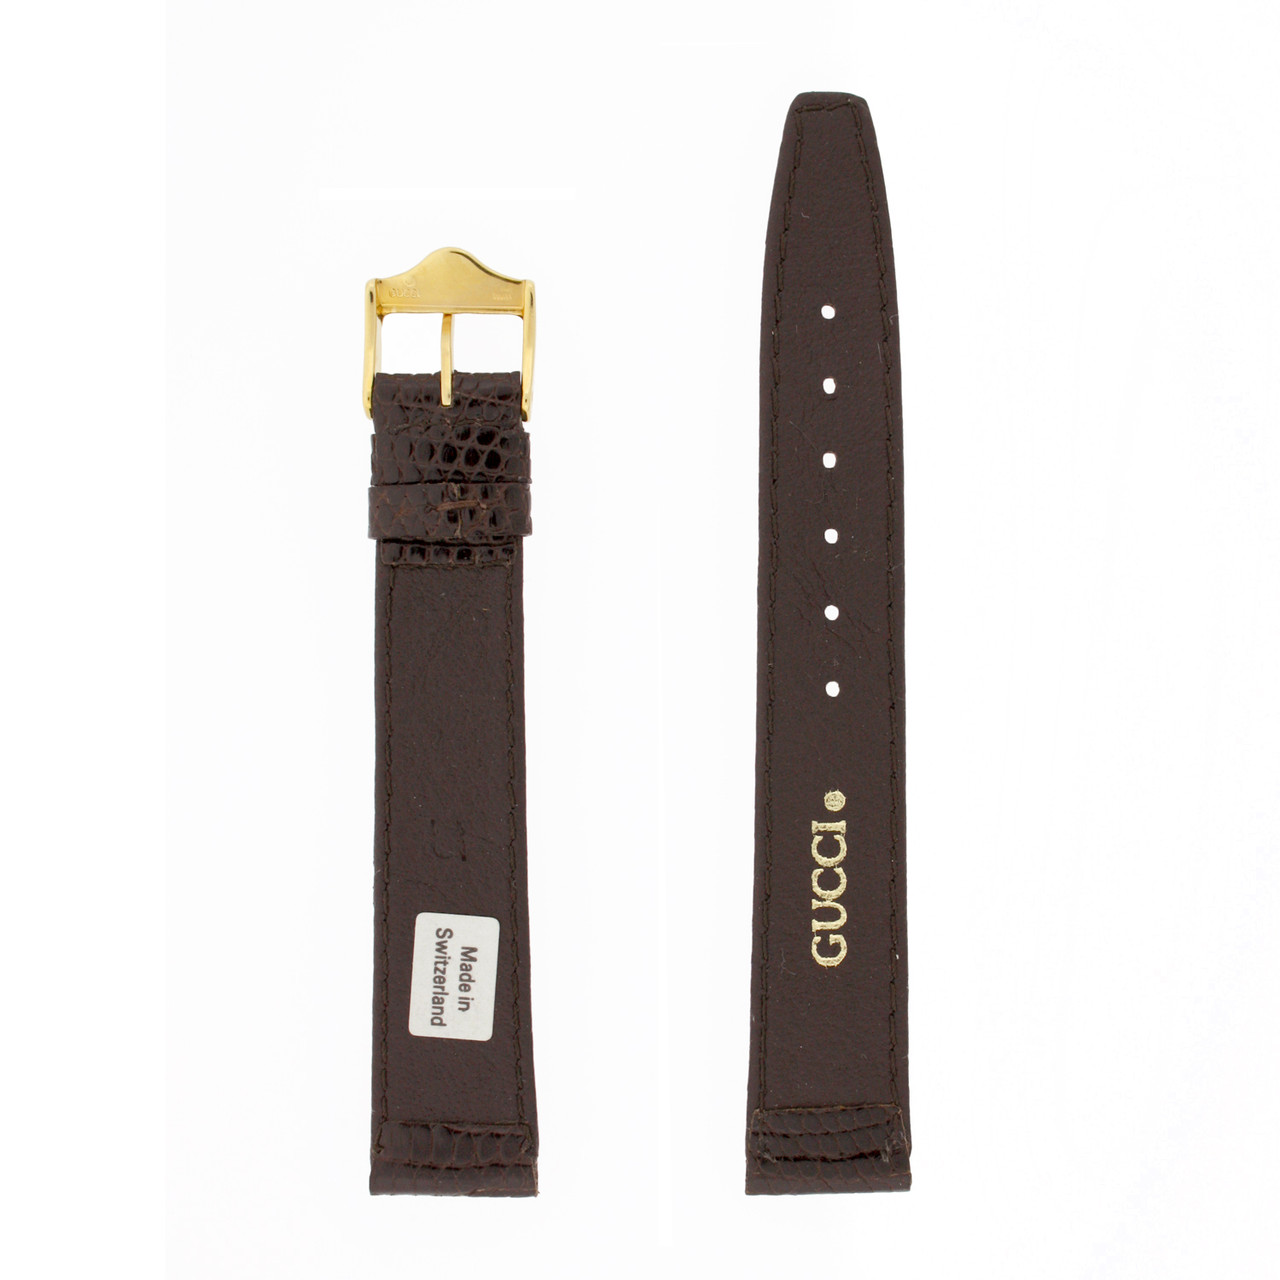 Gucci Band Brown Lizard 17mm Watch Strap fits 2200M 3000M 7600M